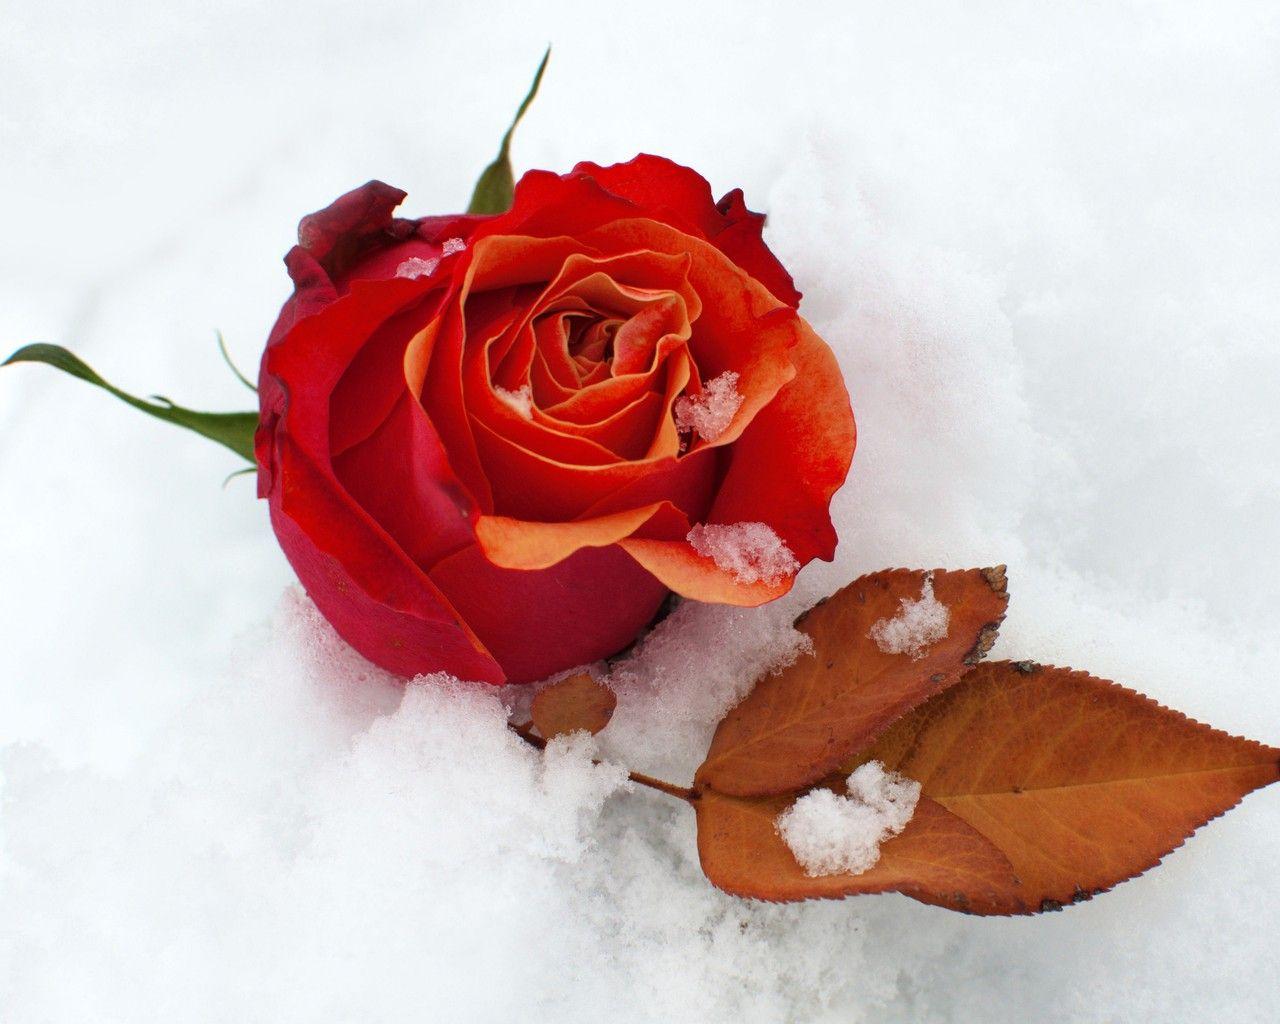 nature winter season snow leaf flowers roses red rose fresh